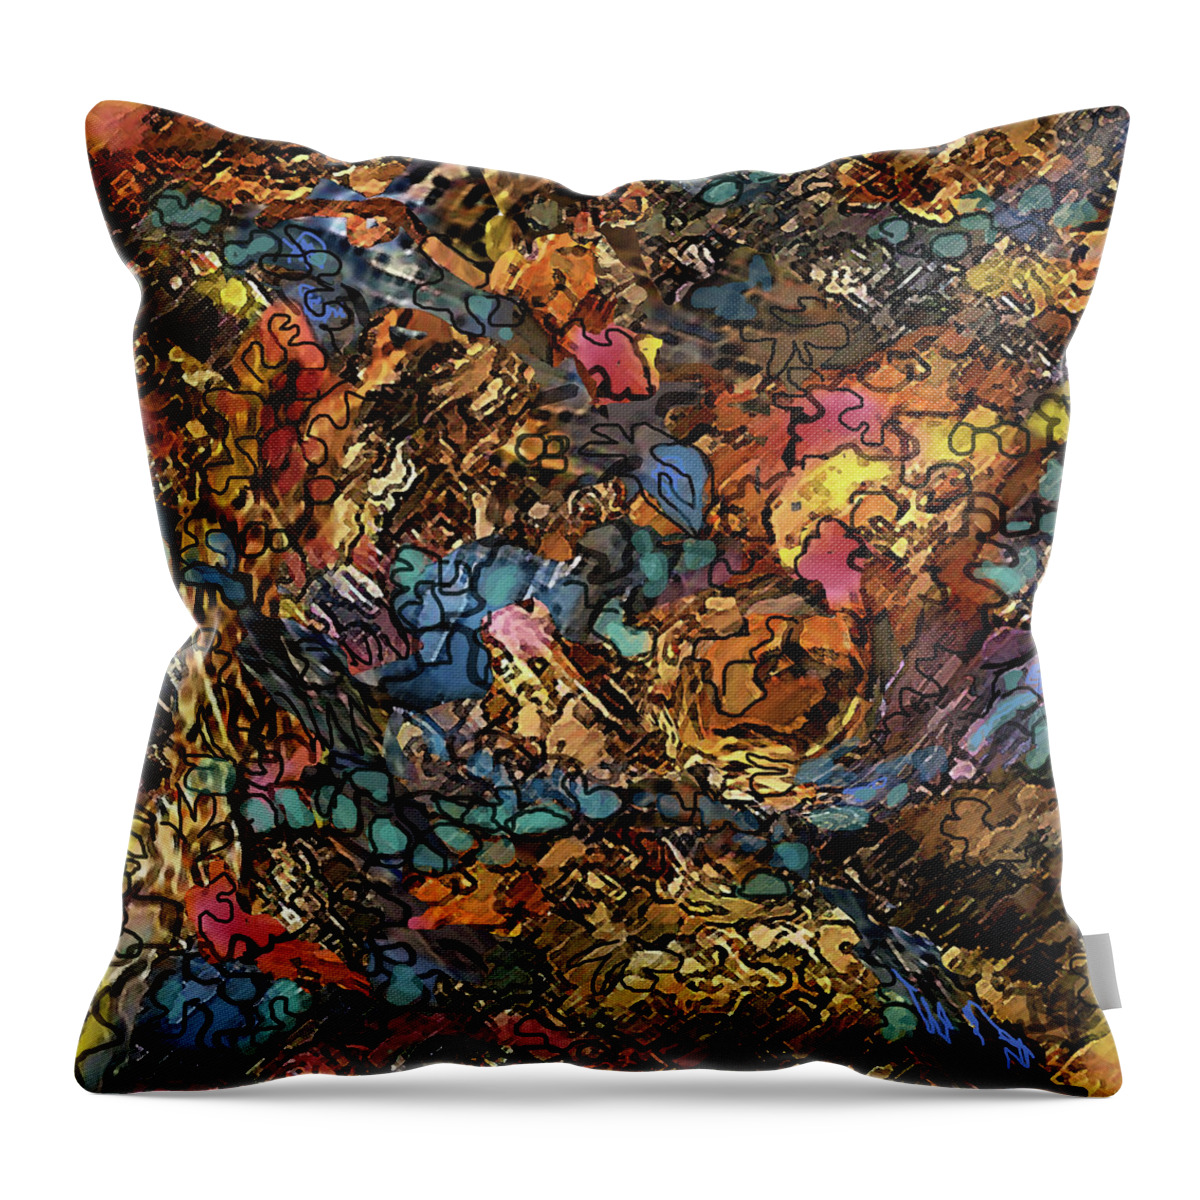 Autumn Colors Throw Pillow featuring the digital art Volcanic Flow by Jean Batzell Fitzgerald